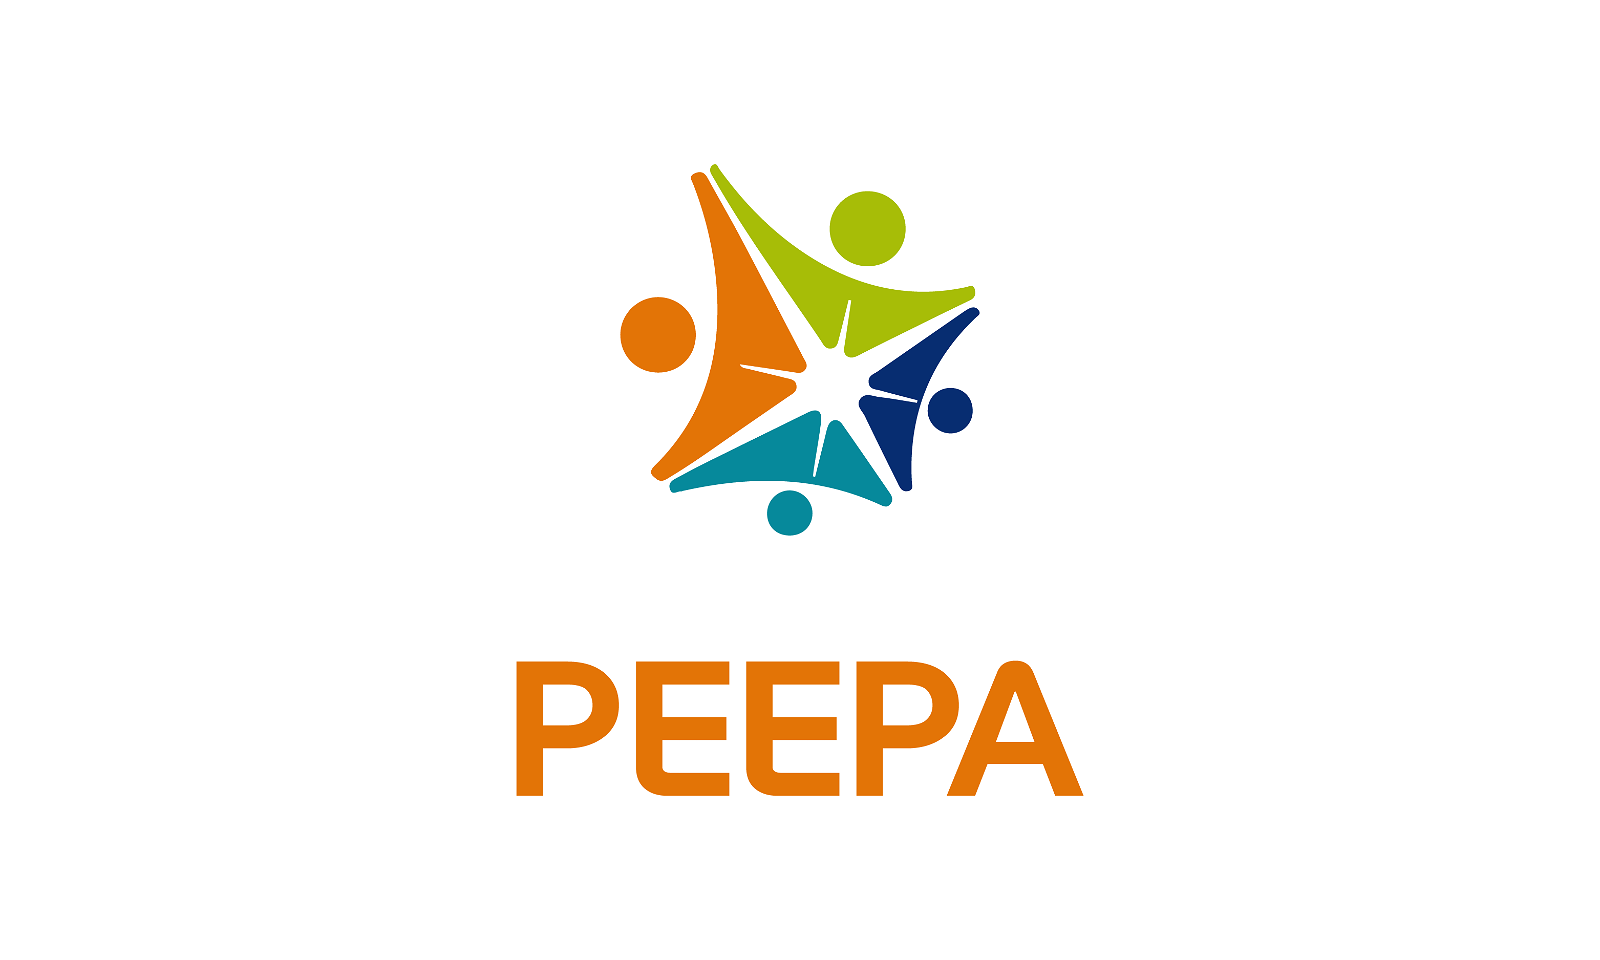 Peepa.com - Creative brandable domain for sale